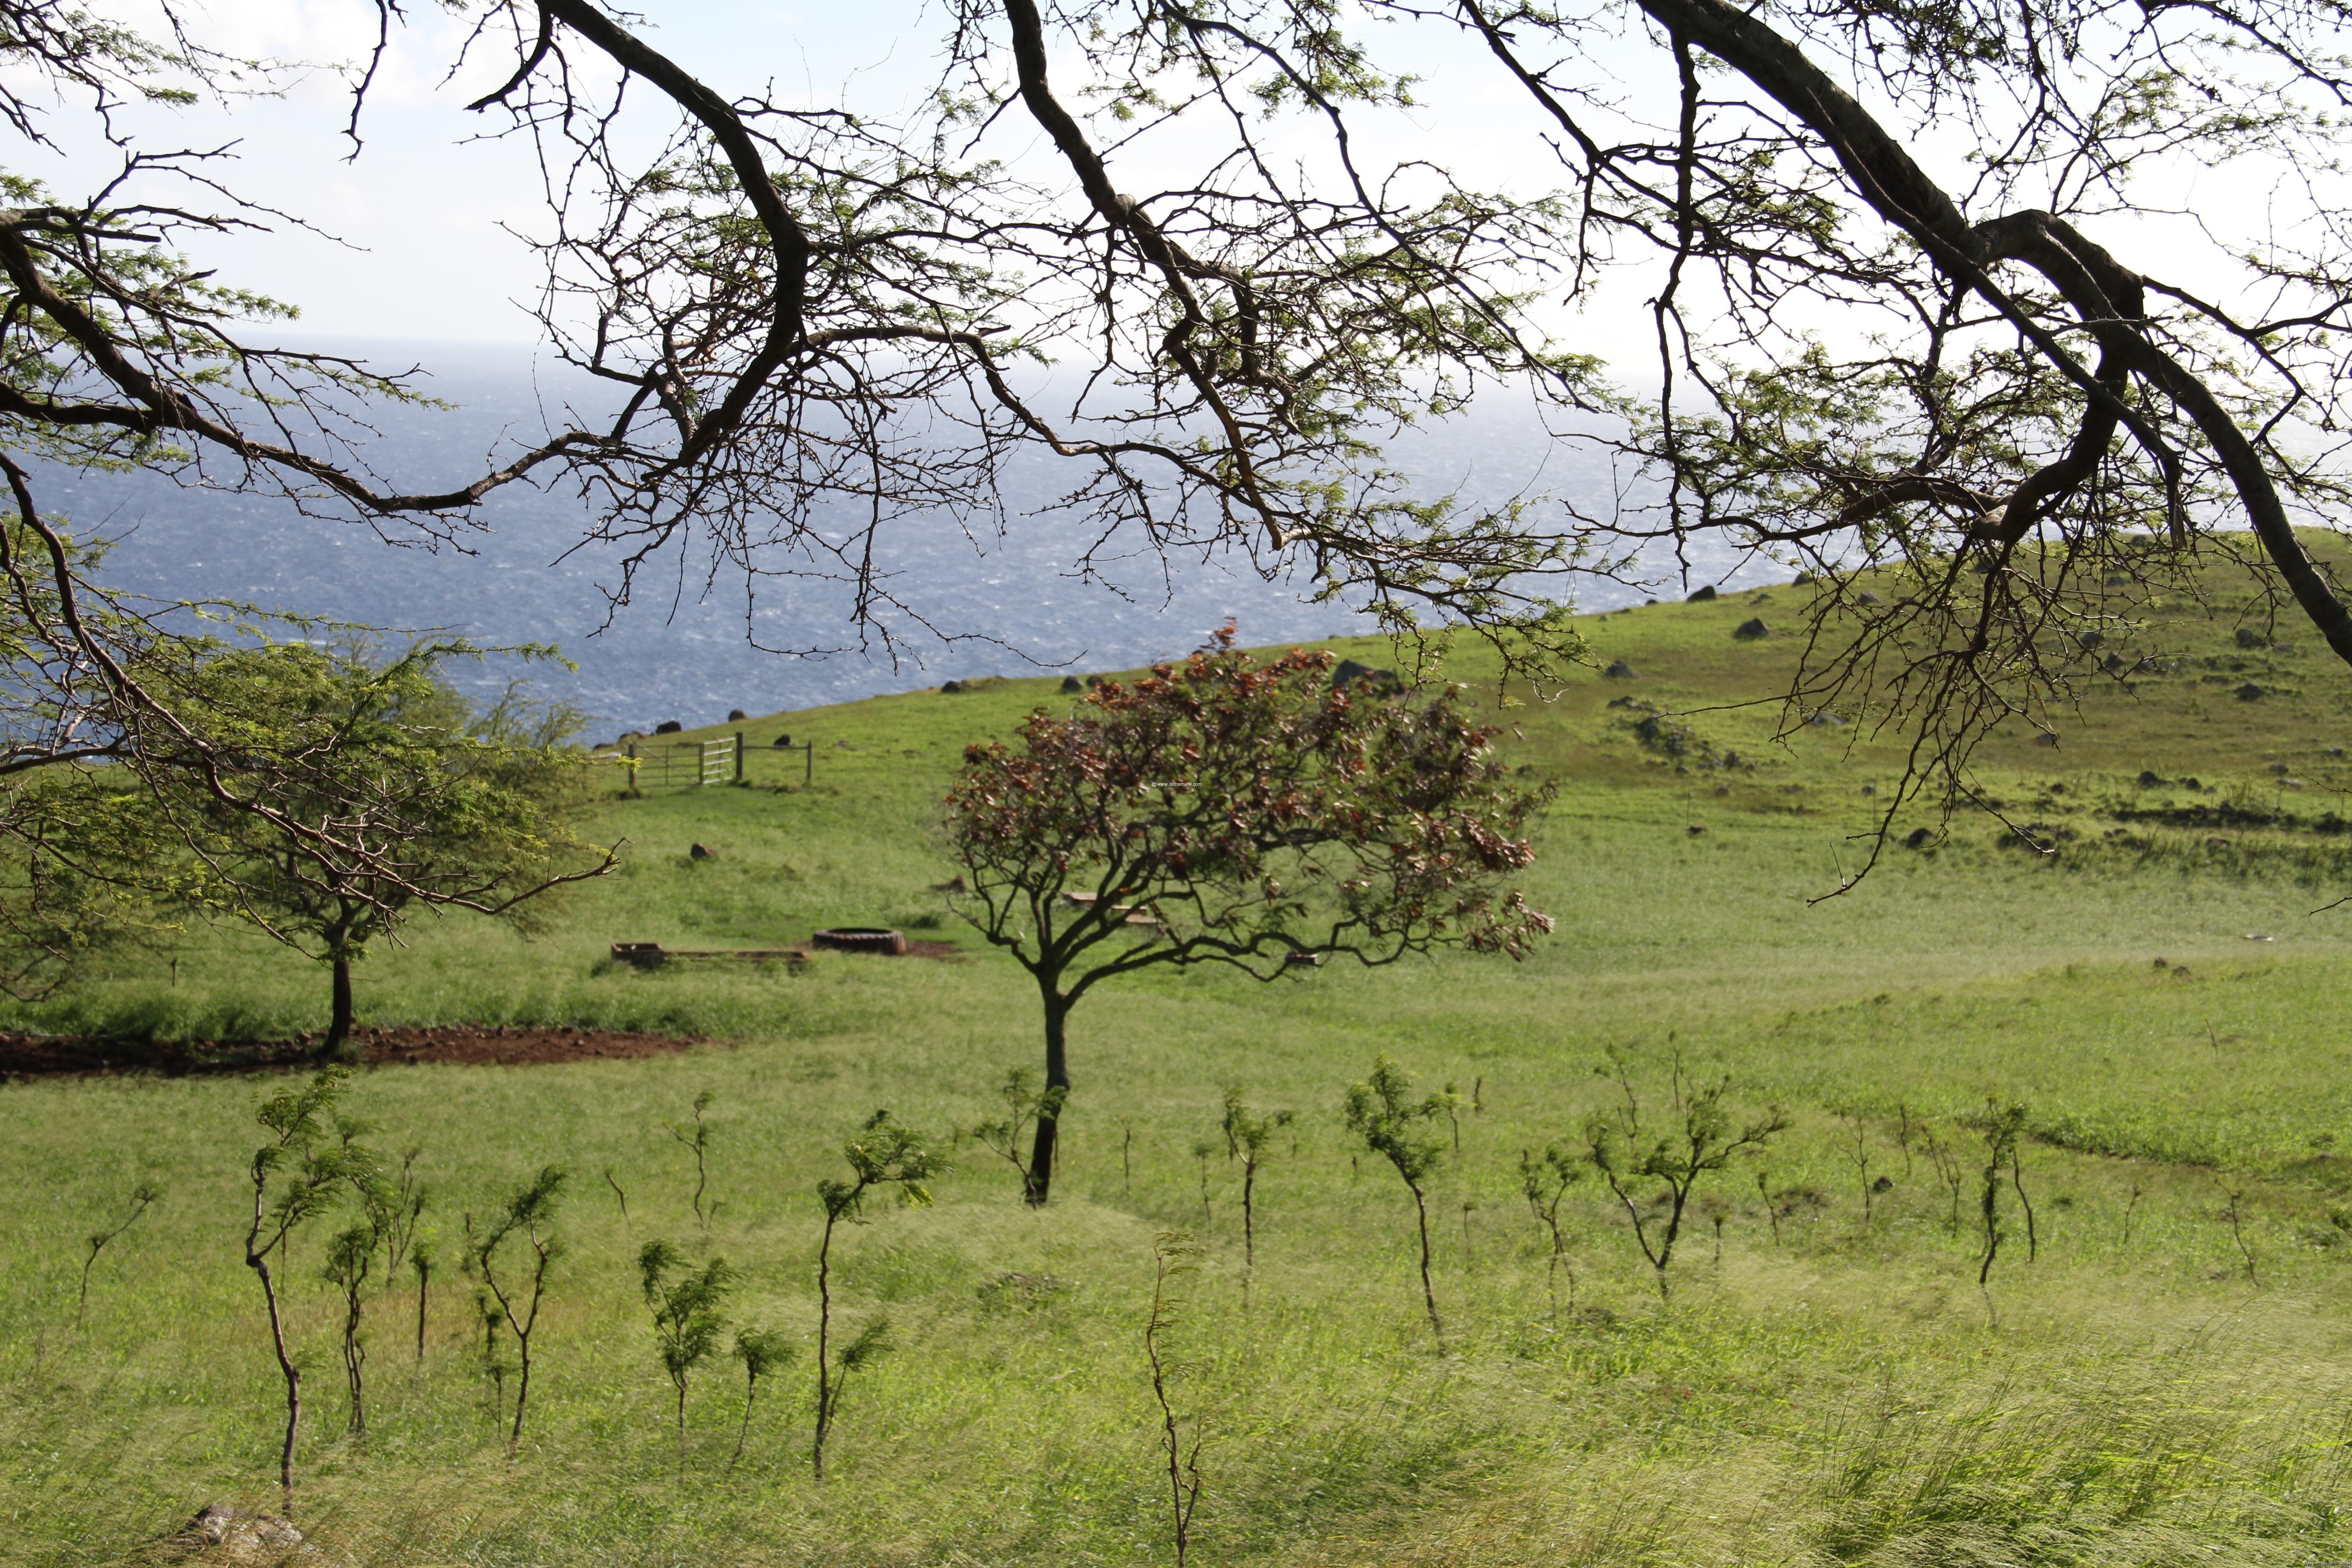 Scenic views on the way to Haleakala